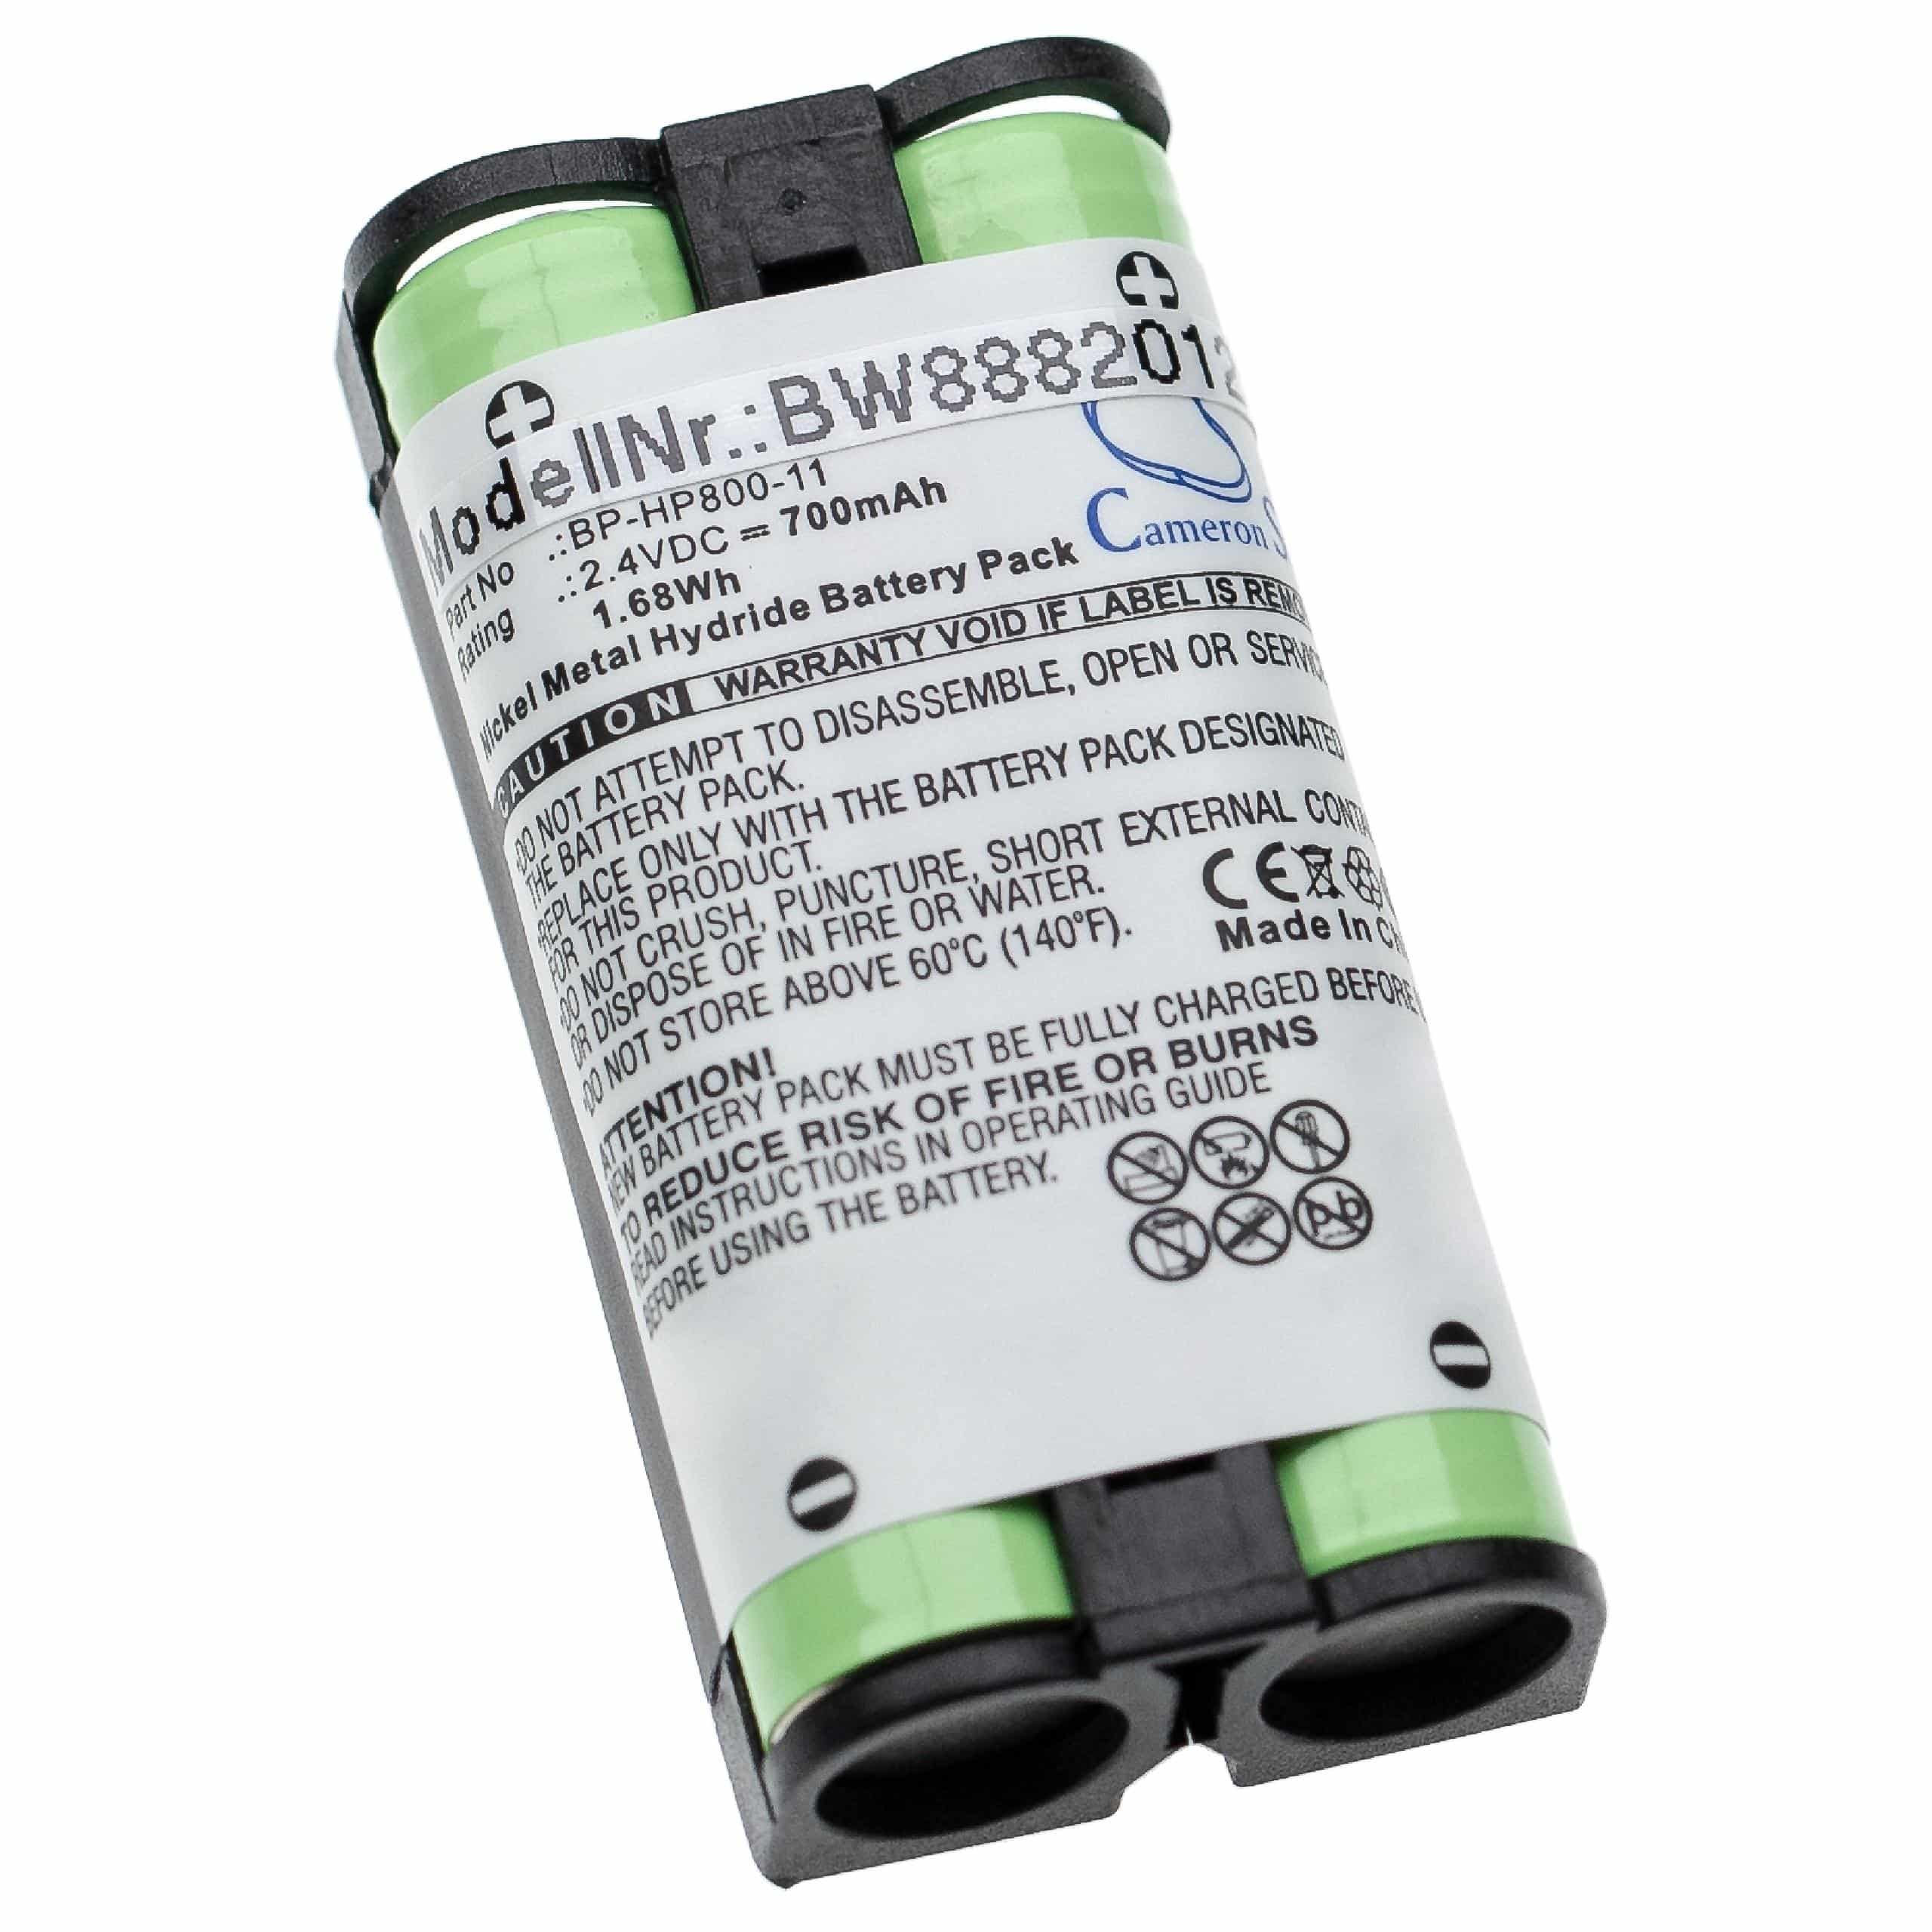 Batteria per auricolari cuffie wireless sostituisce Sony 9-885-216-11, 9-885-216-12 Sony - 700mAh 2,4V NiMH